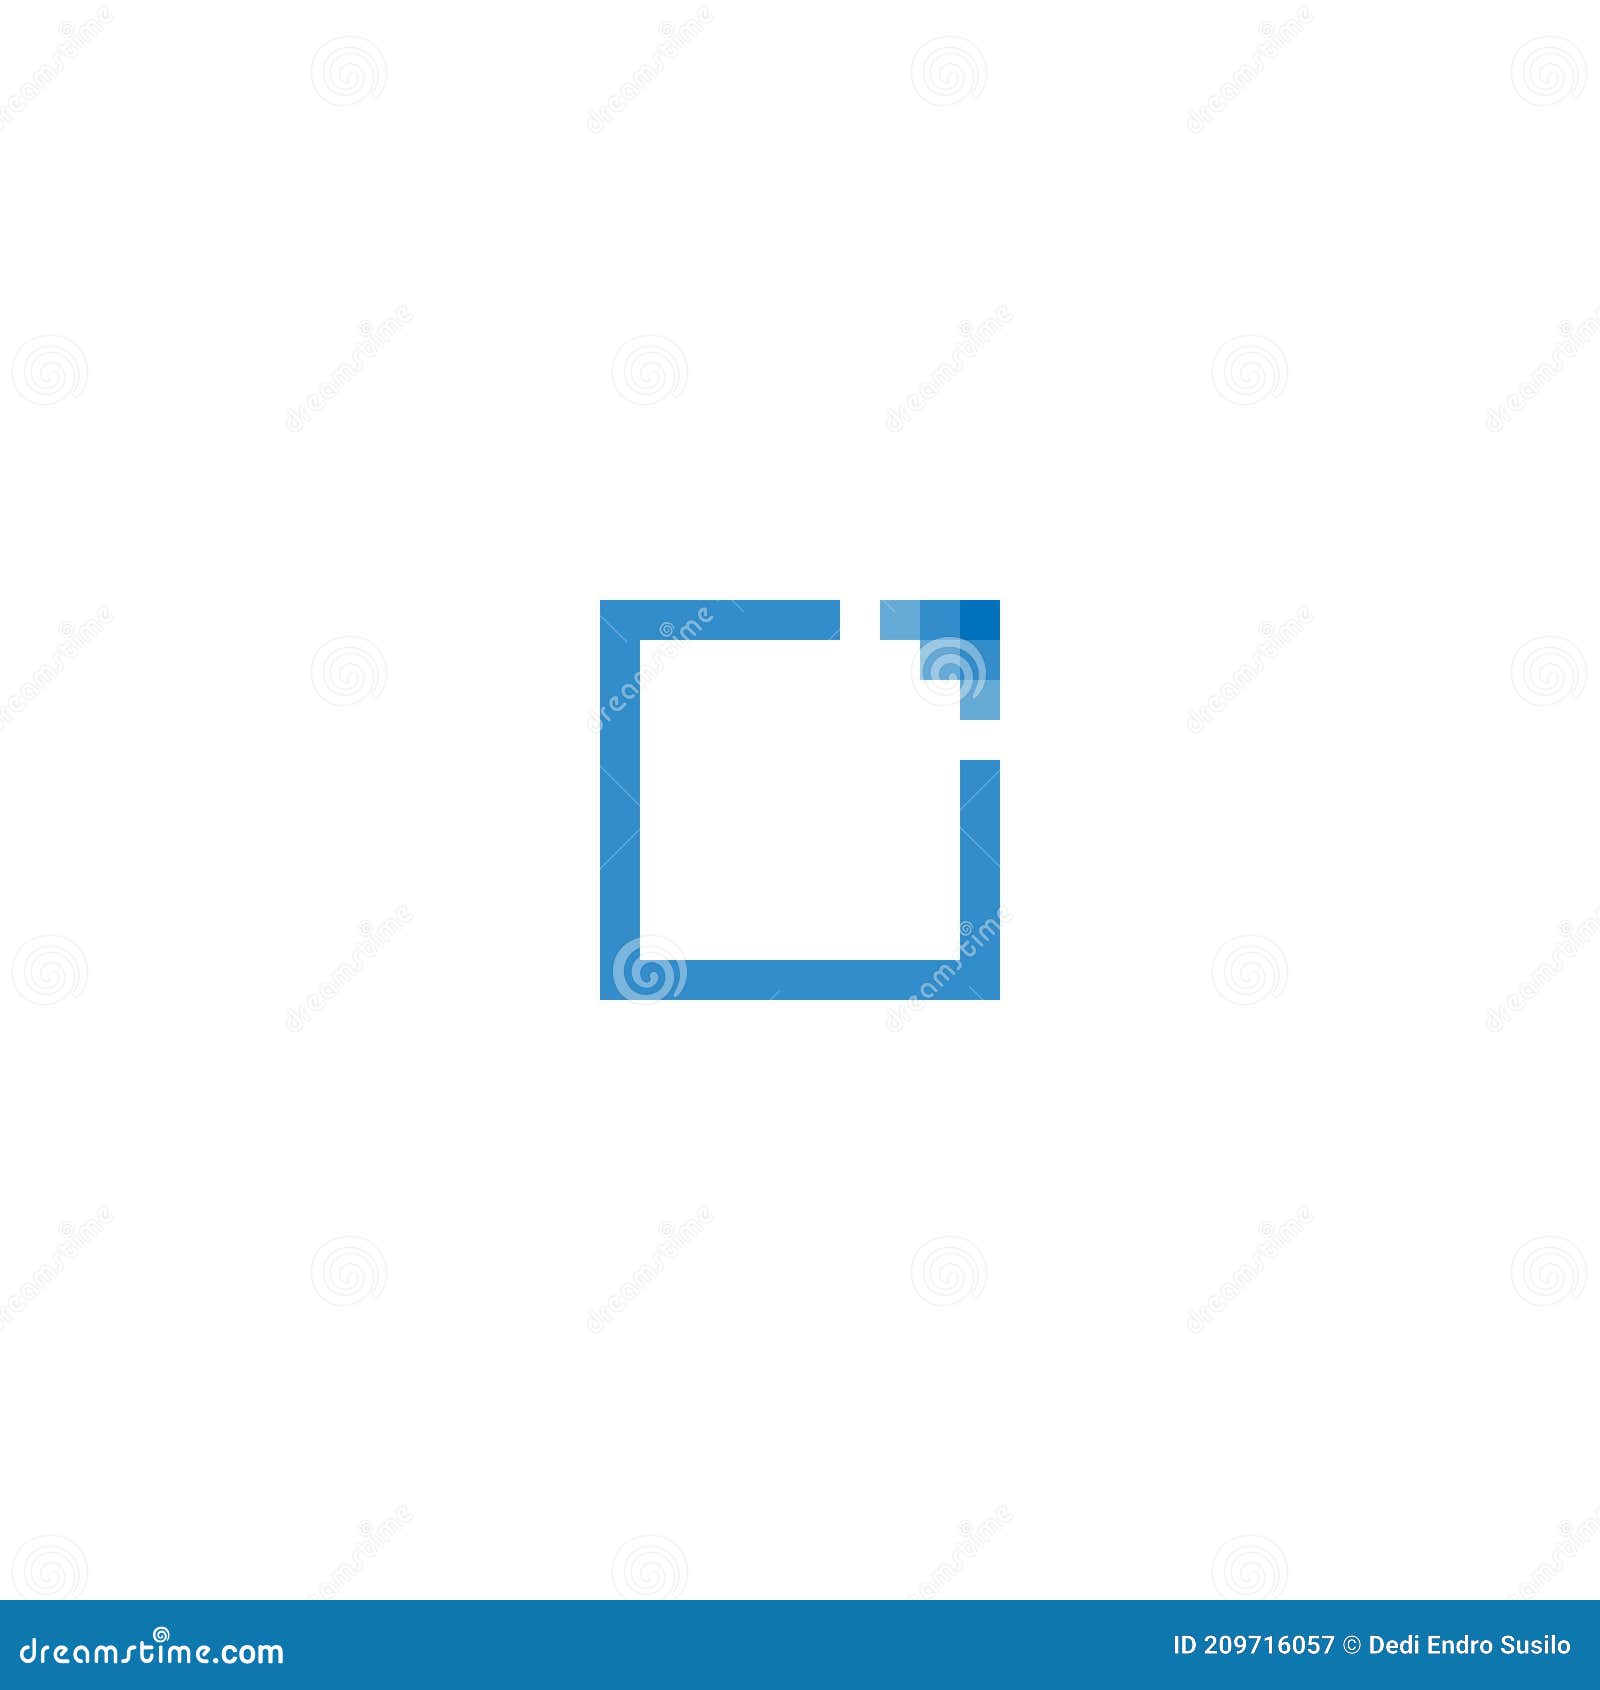 the gallery frame logo describes a square frame